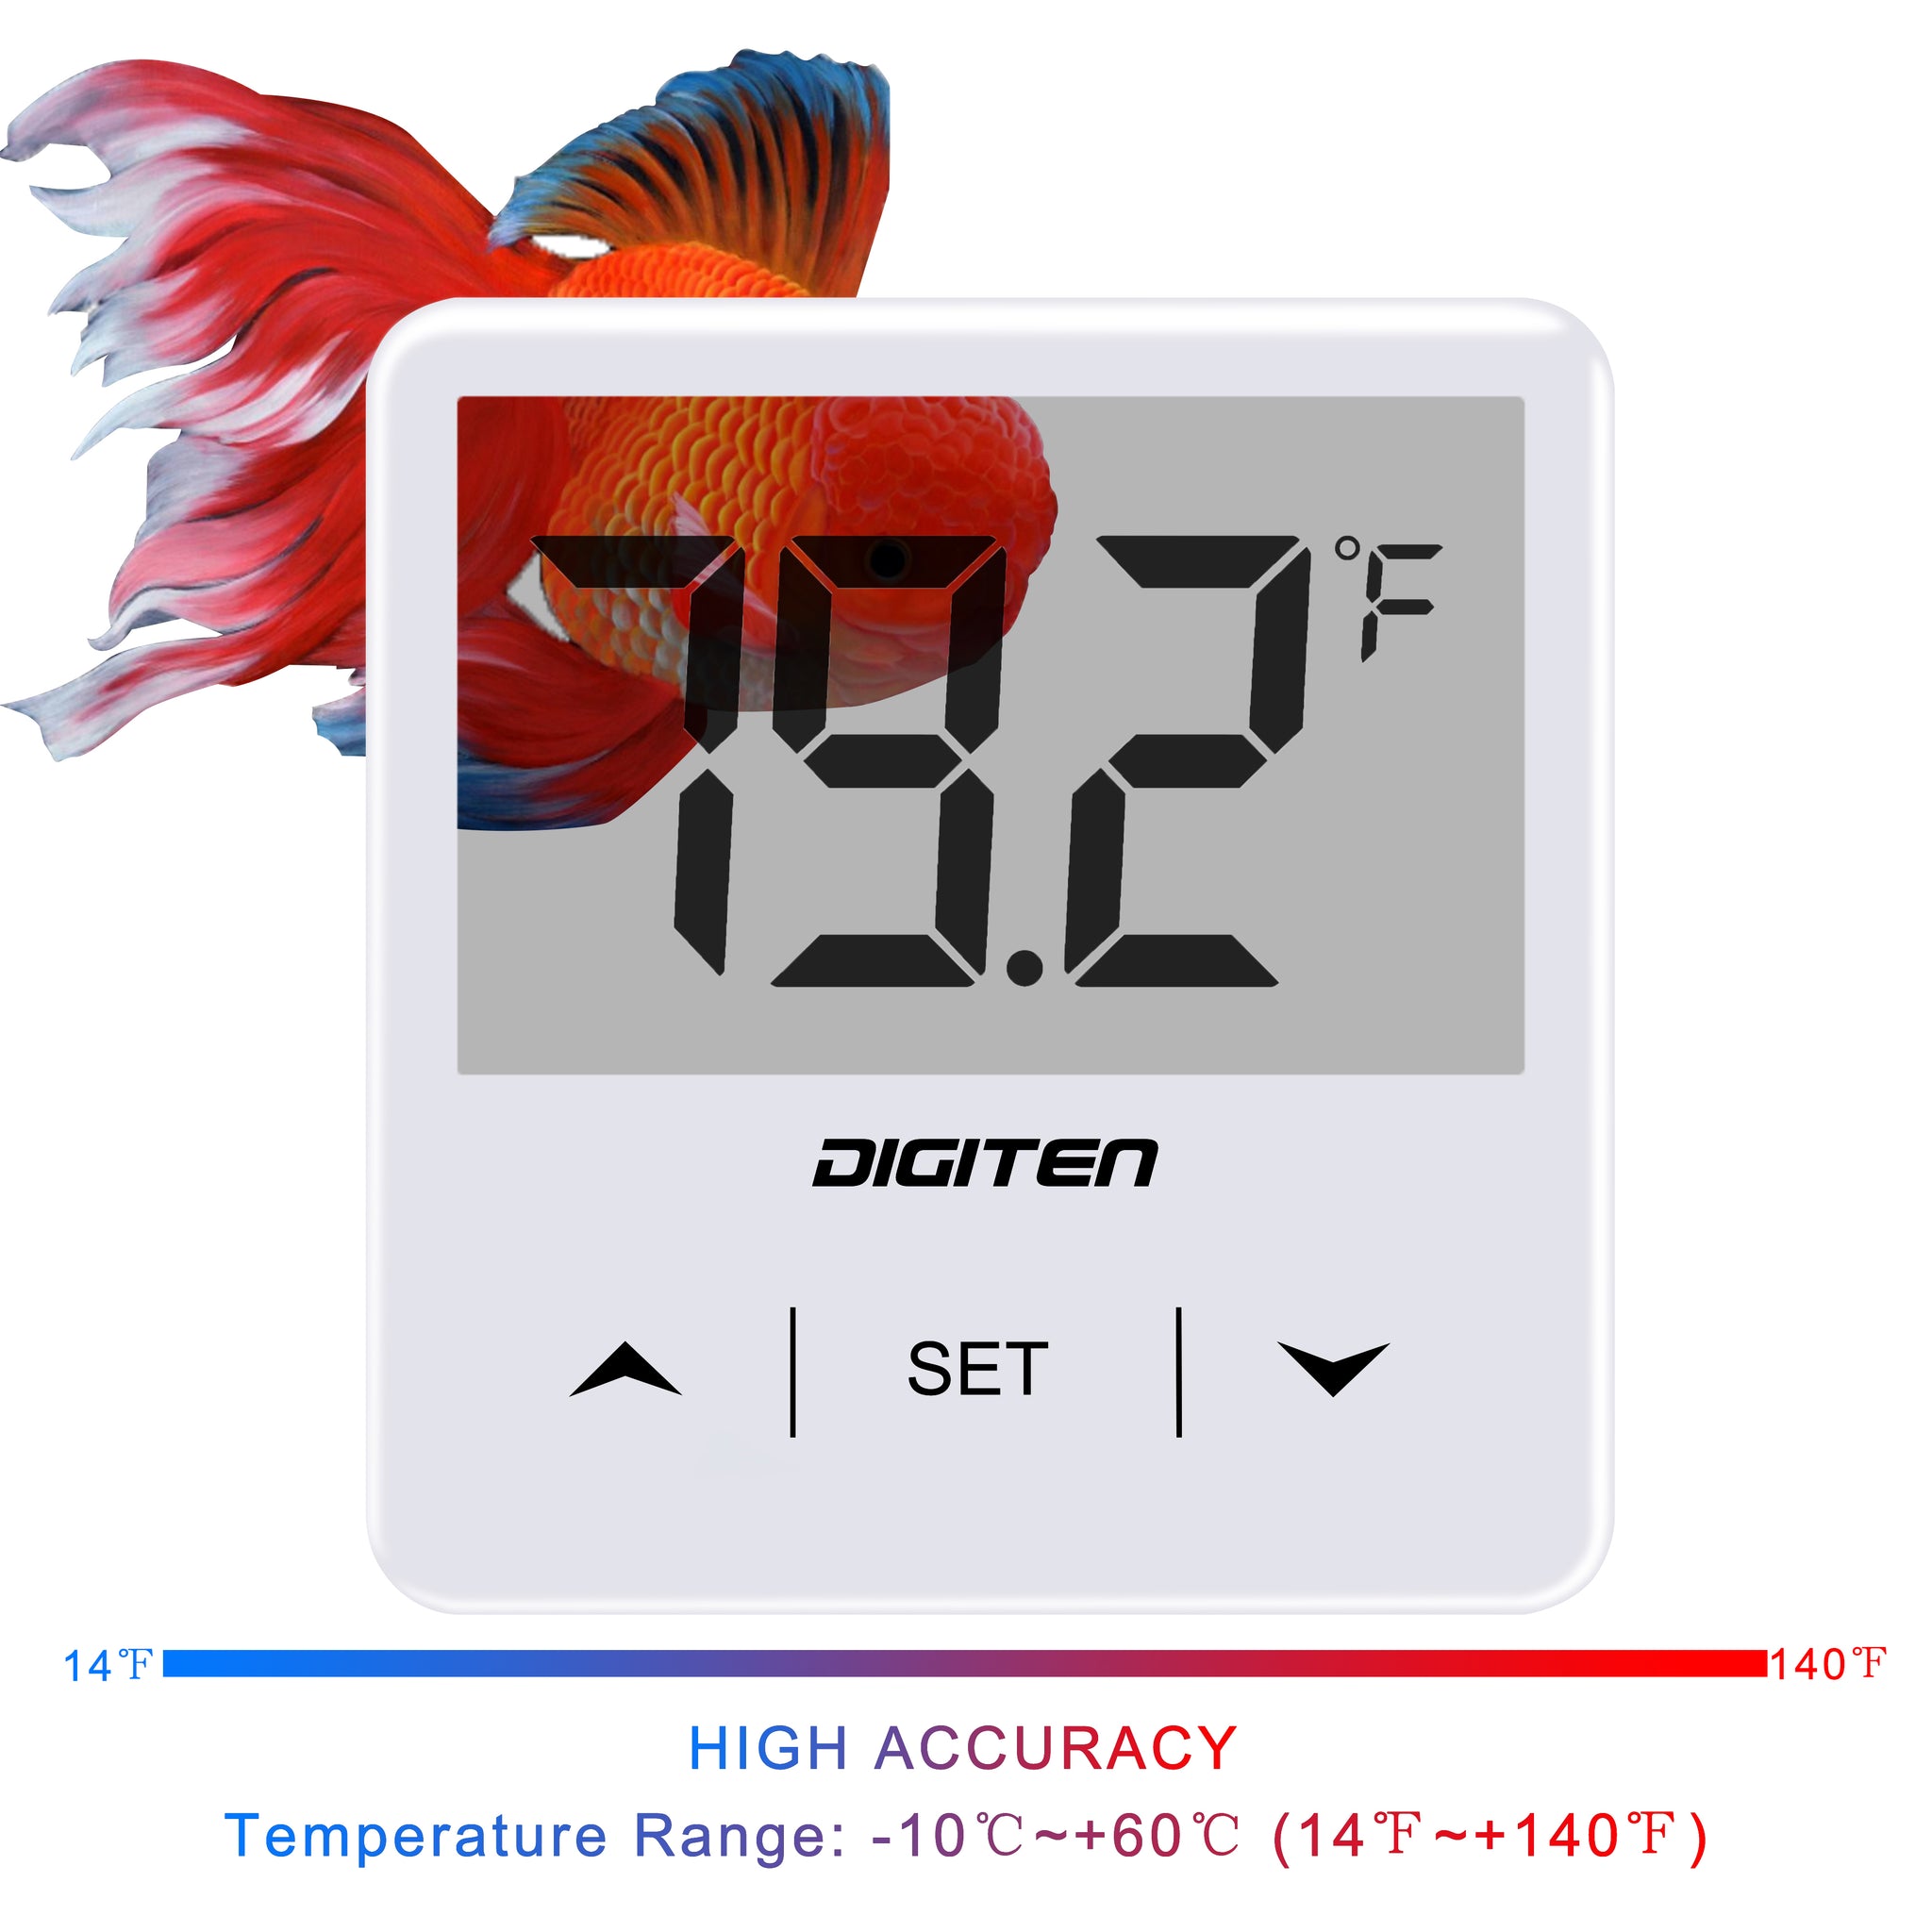 DaToo Aquarium Thermometer Digital Fish Tank Thermometer Accurate